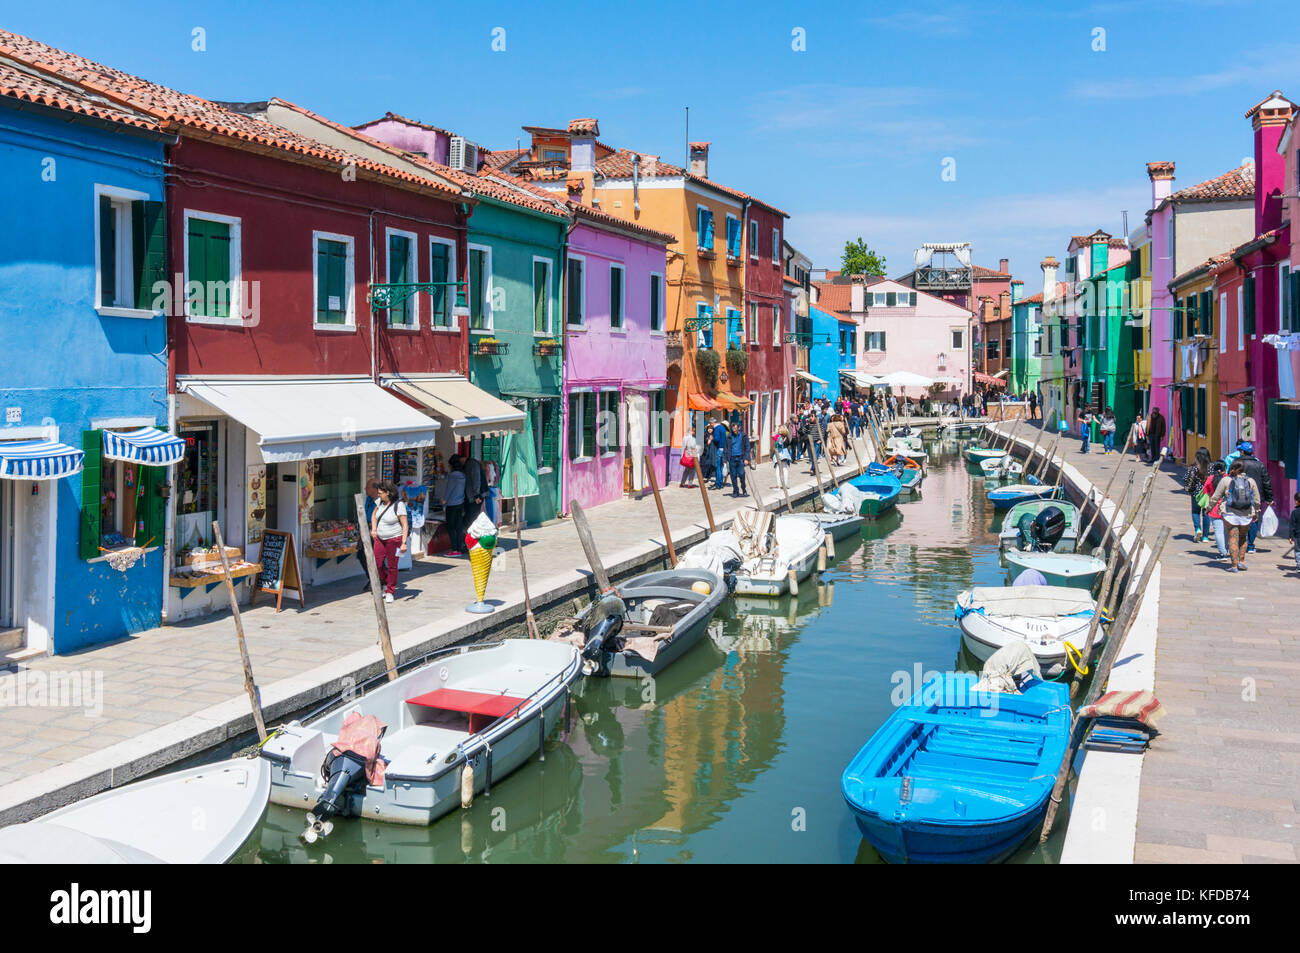 VENICE ITALY VENICE Colourful houses along a canal on the Island of Burano Venice lagoon Metropolitan City of Venice Italy EU Europe Stock Photo